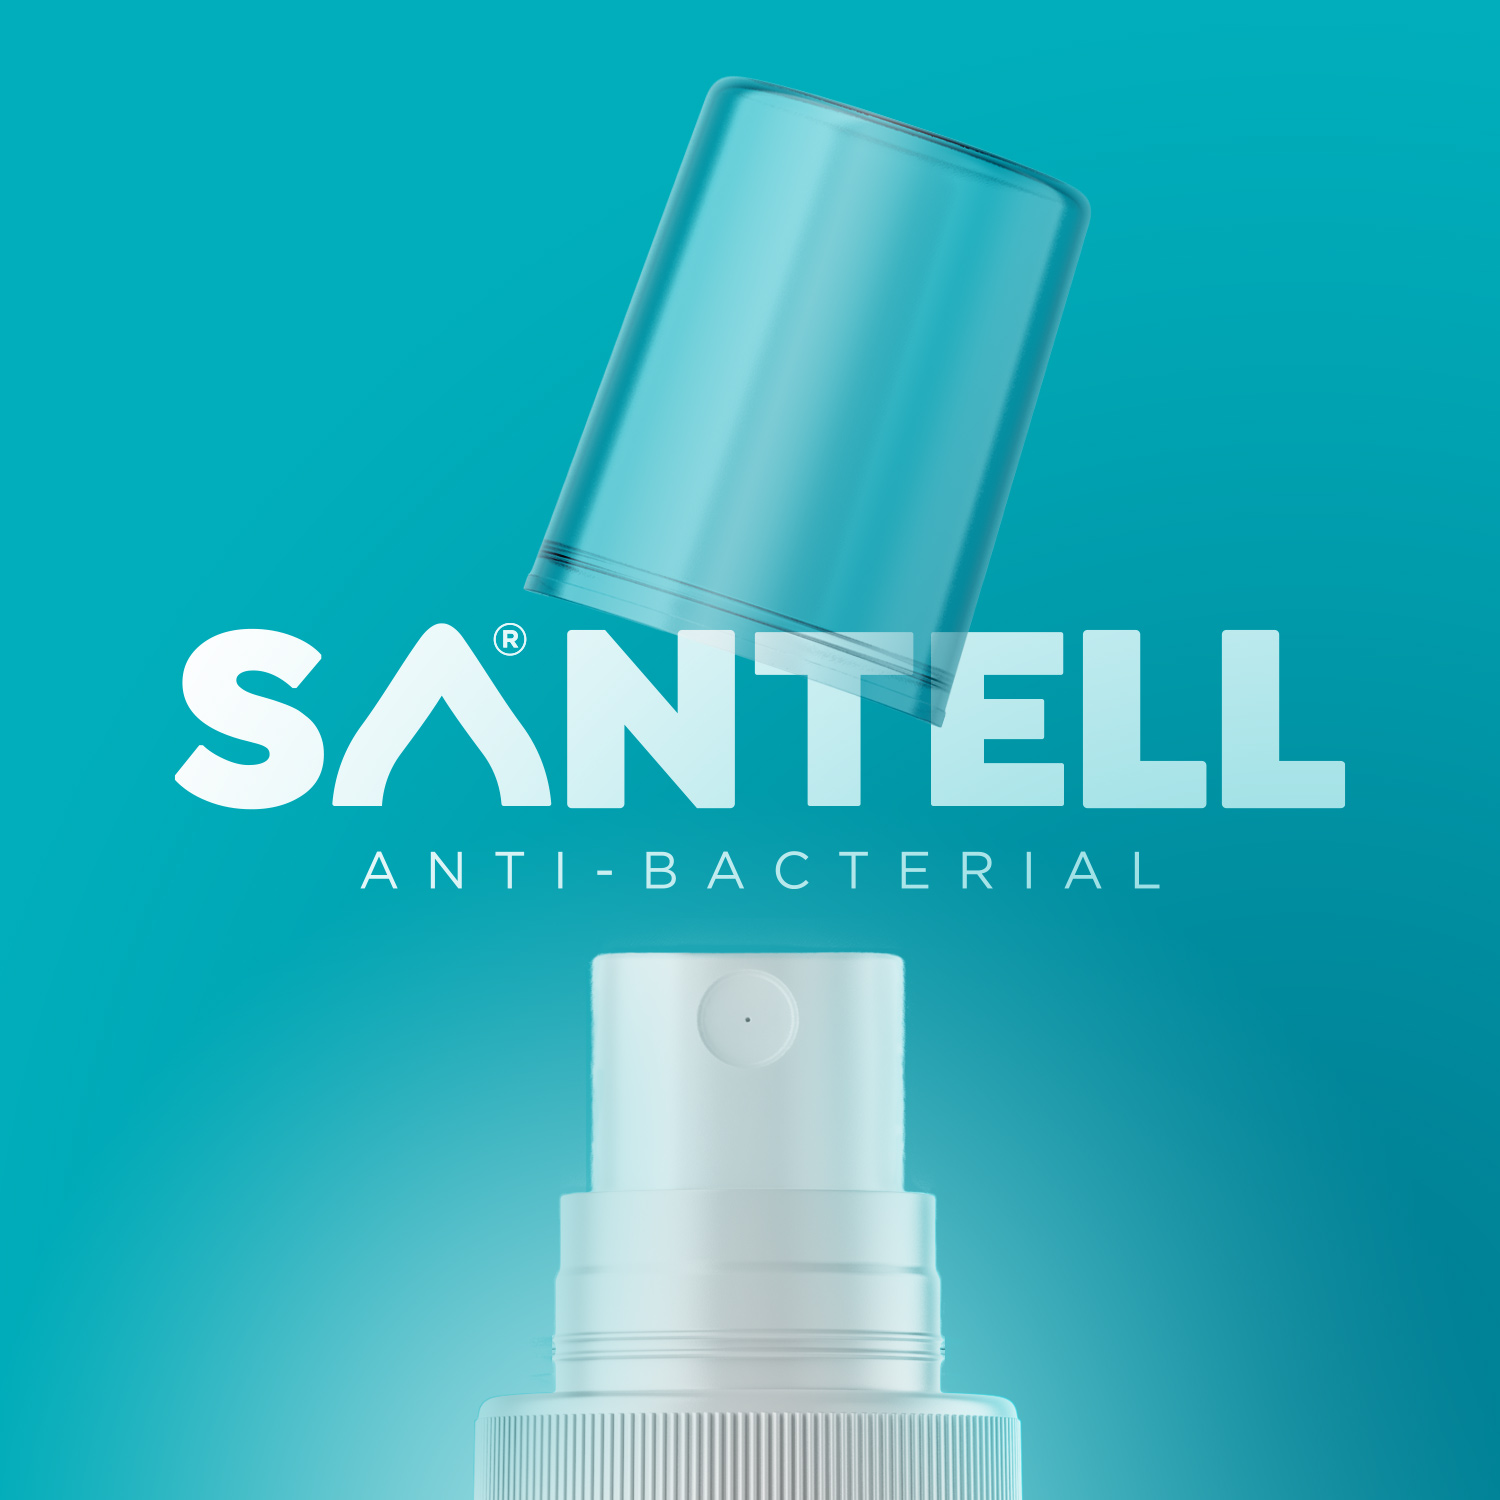 Santell | Disinfectant Product Branding